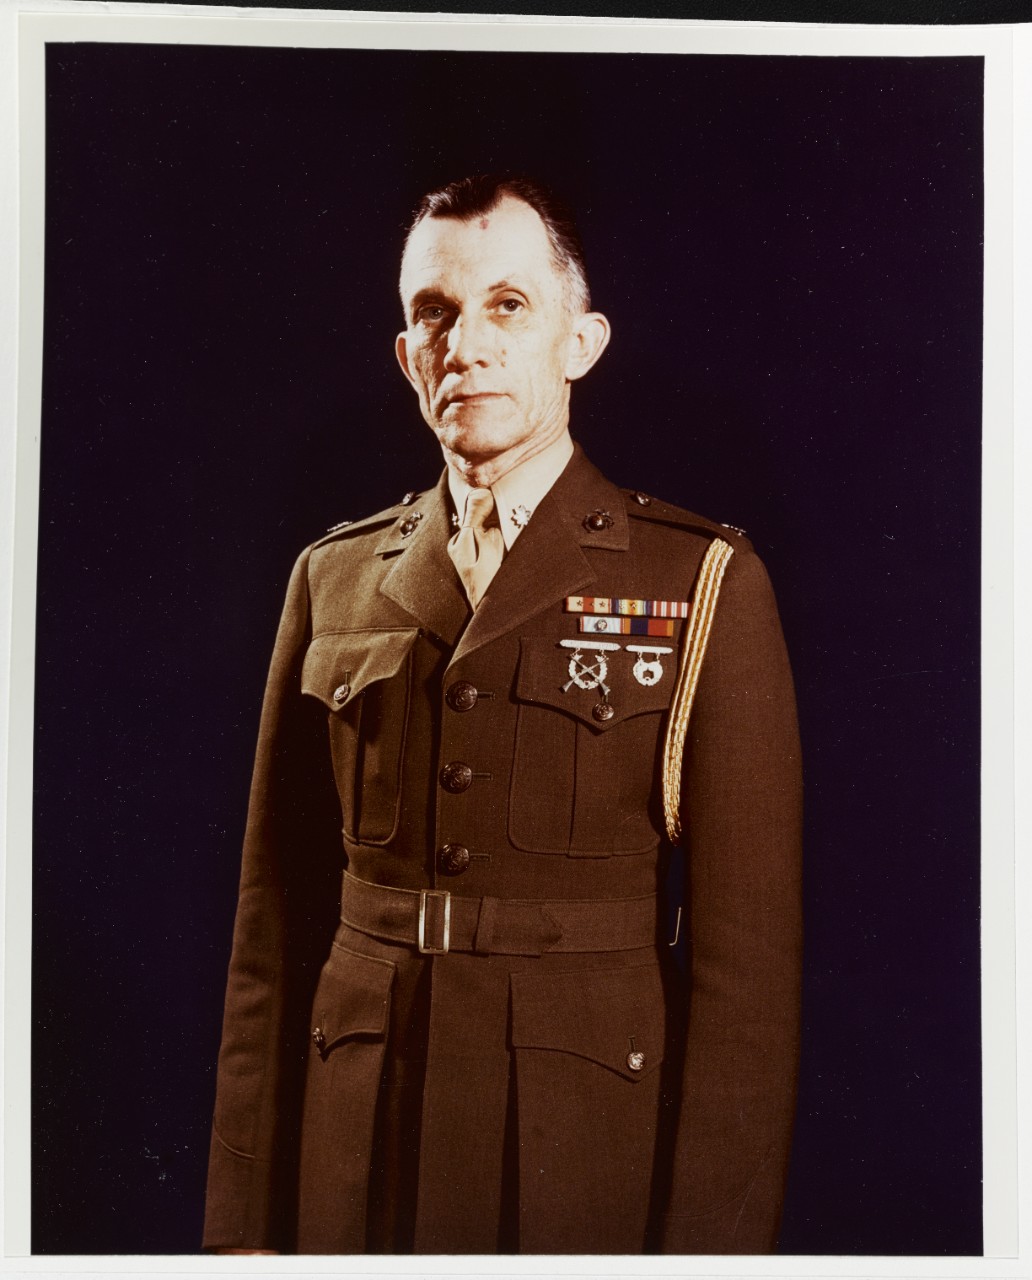 Lieutenant Colonel William F. Brown, U.S. Marine Corps